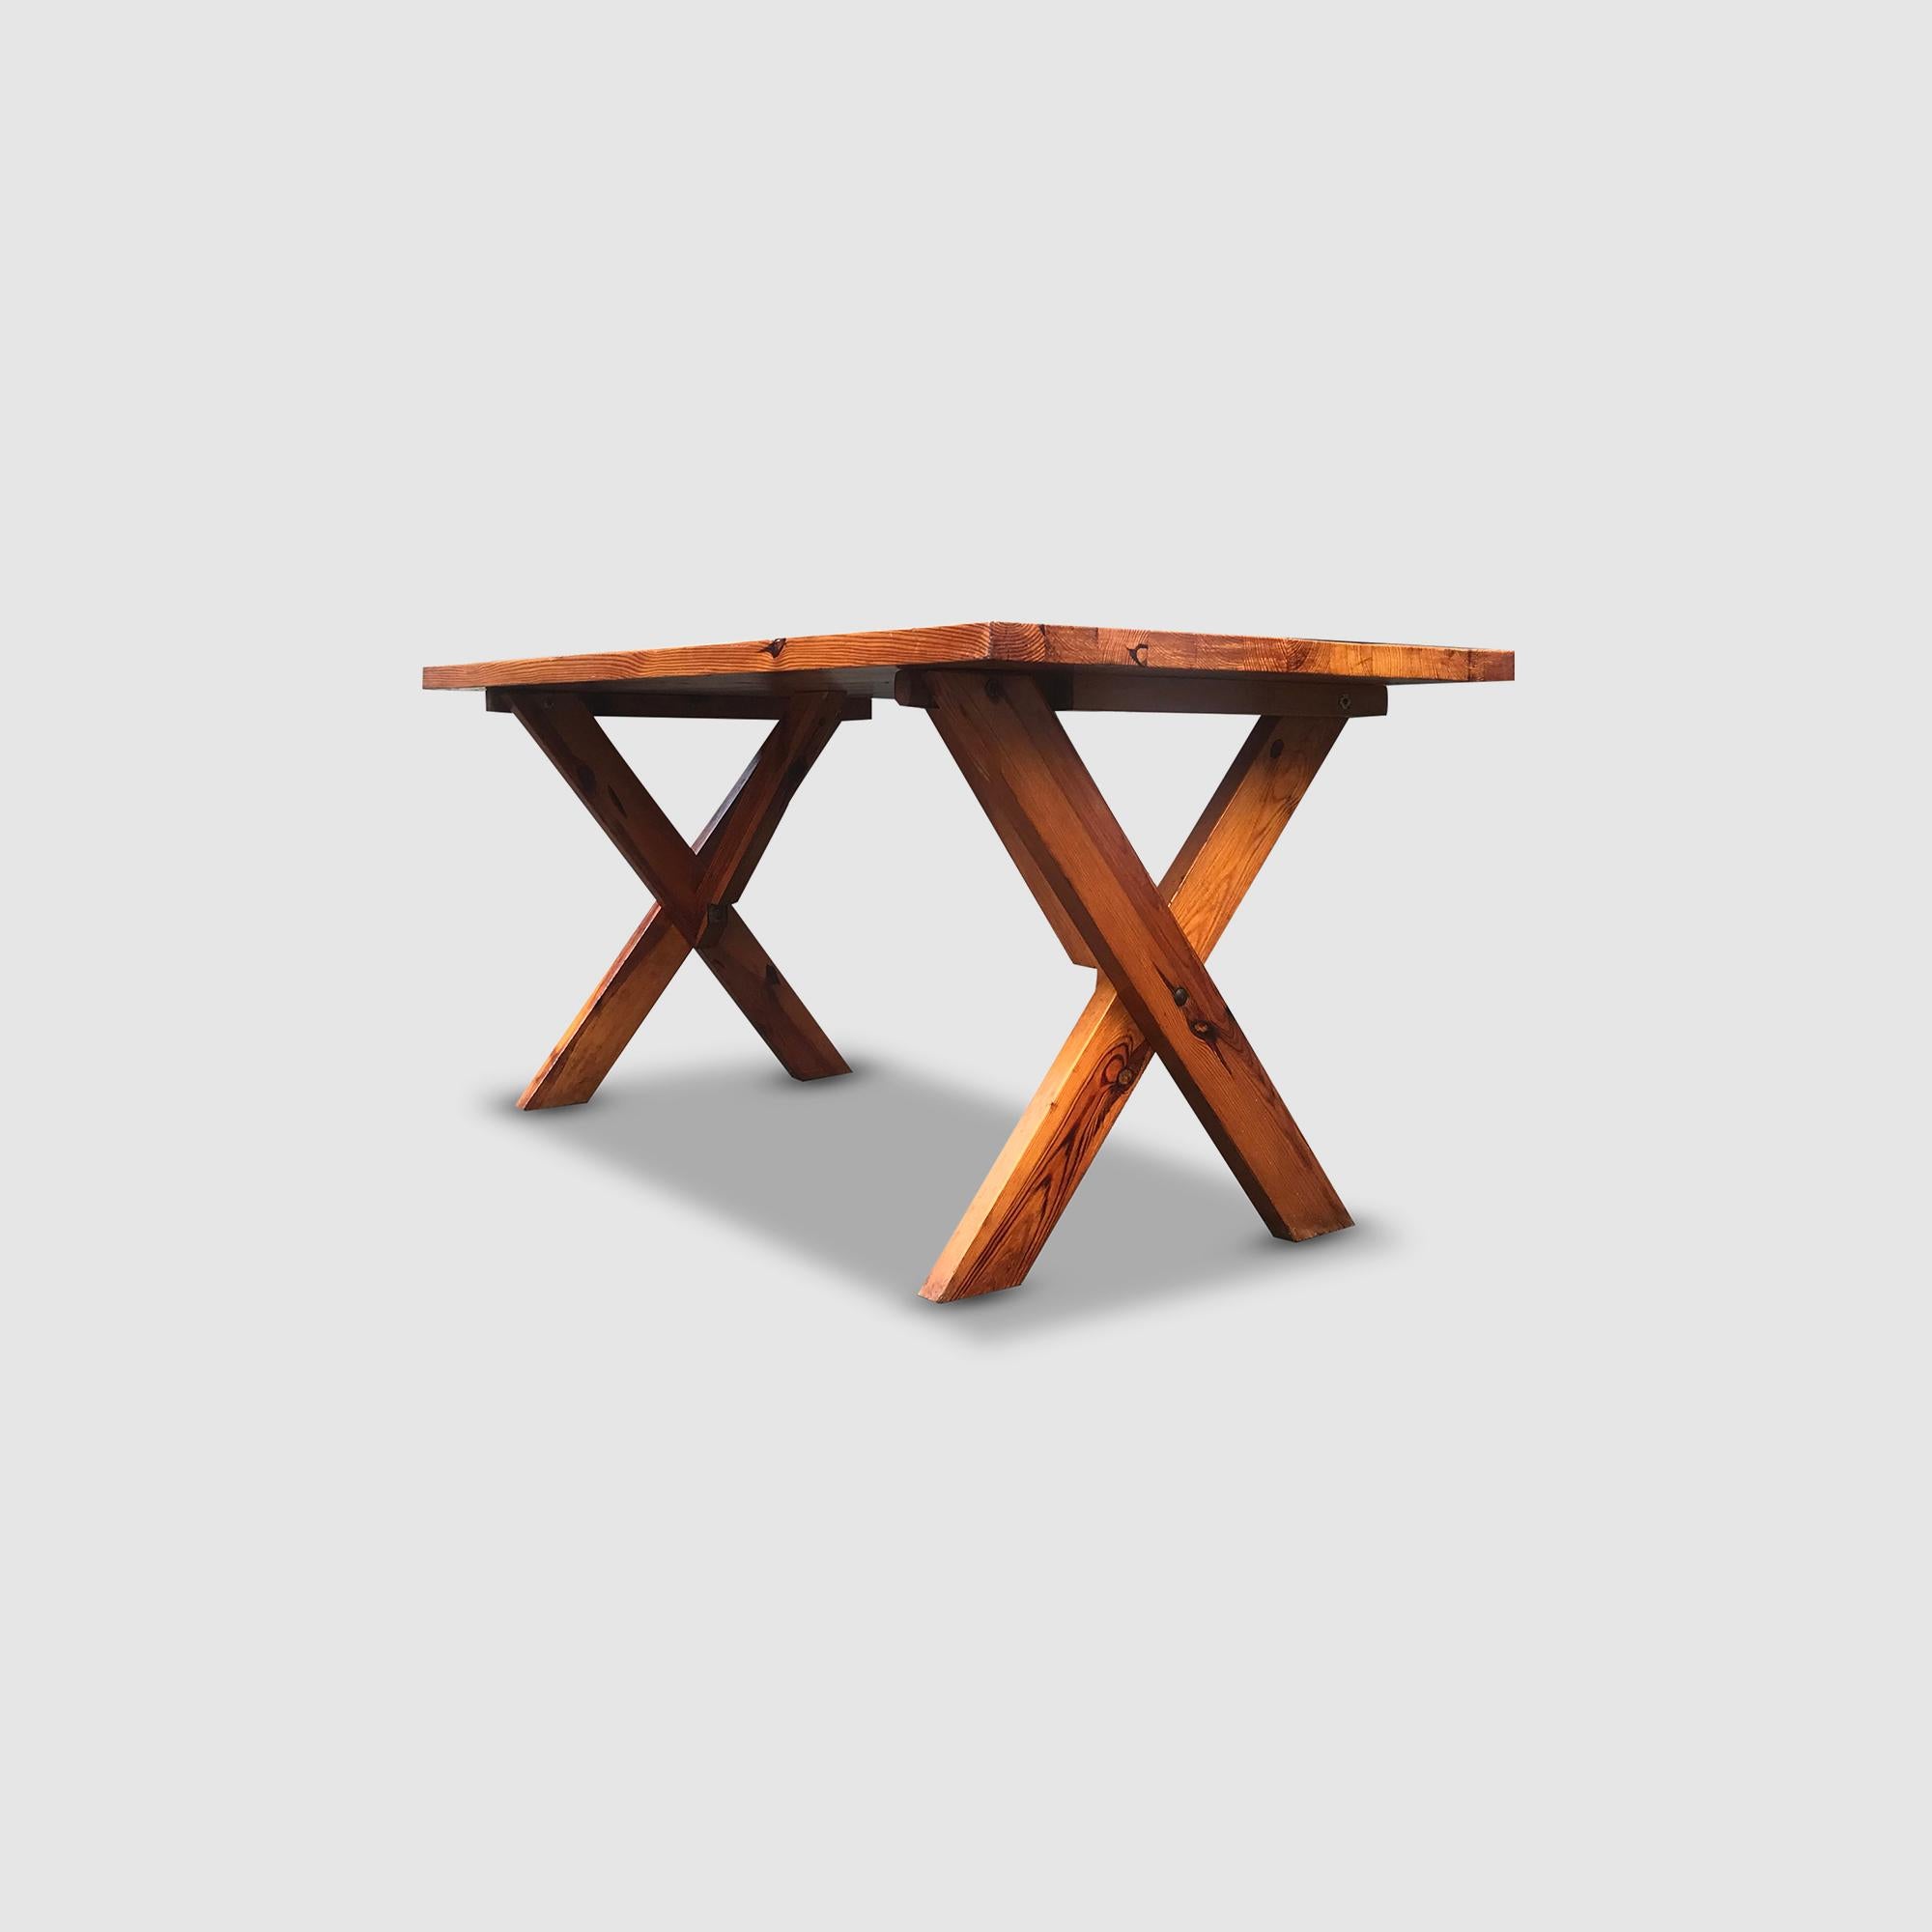 Late 20th Century Modernist X-leg dining table by Ate van Apeldoorn for Houtwerk Hattem 1970s For Sale